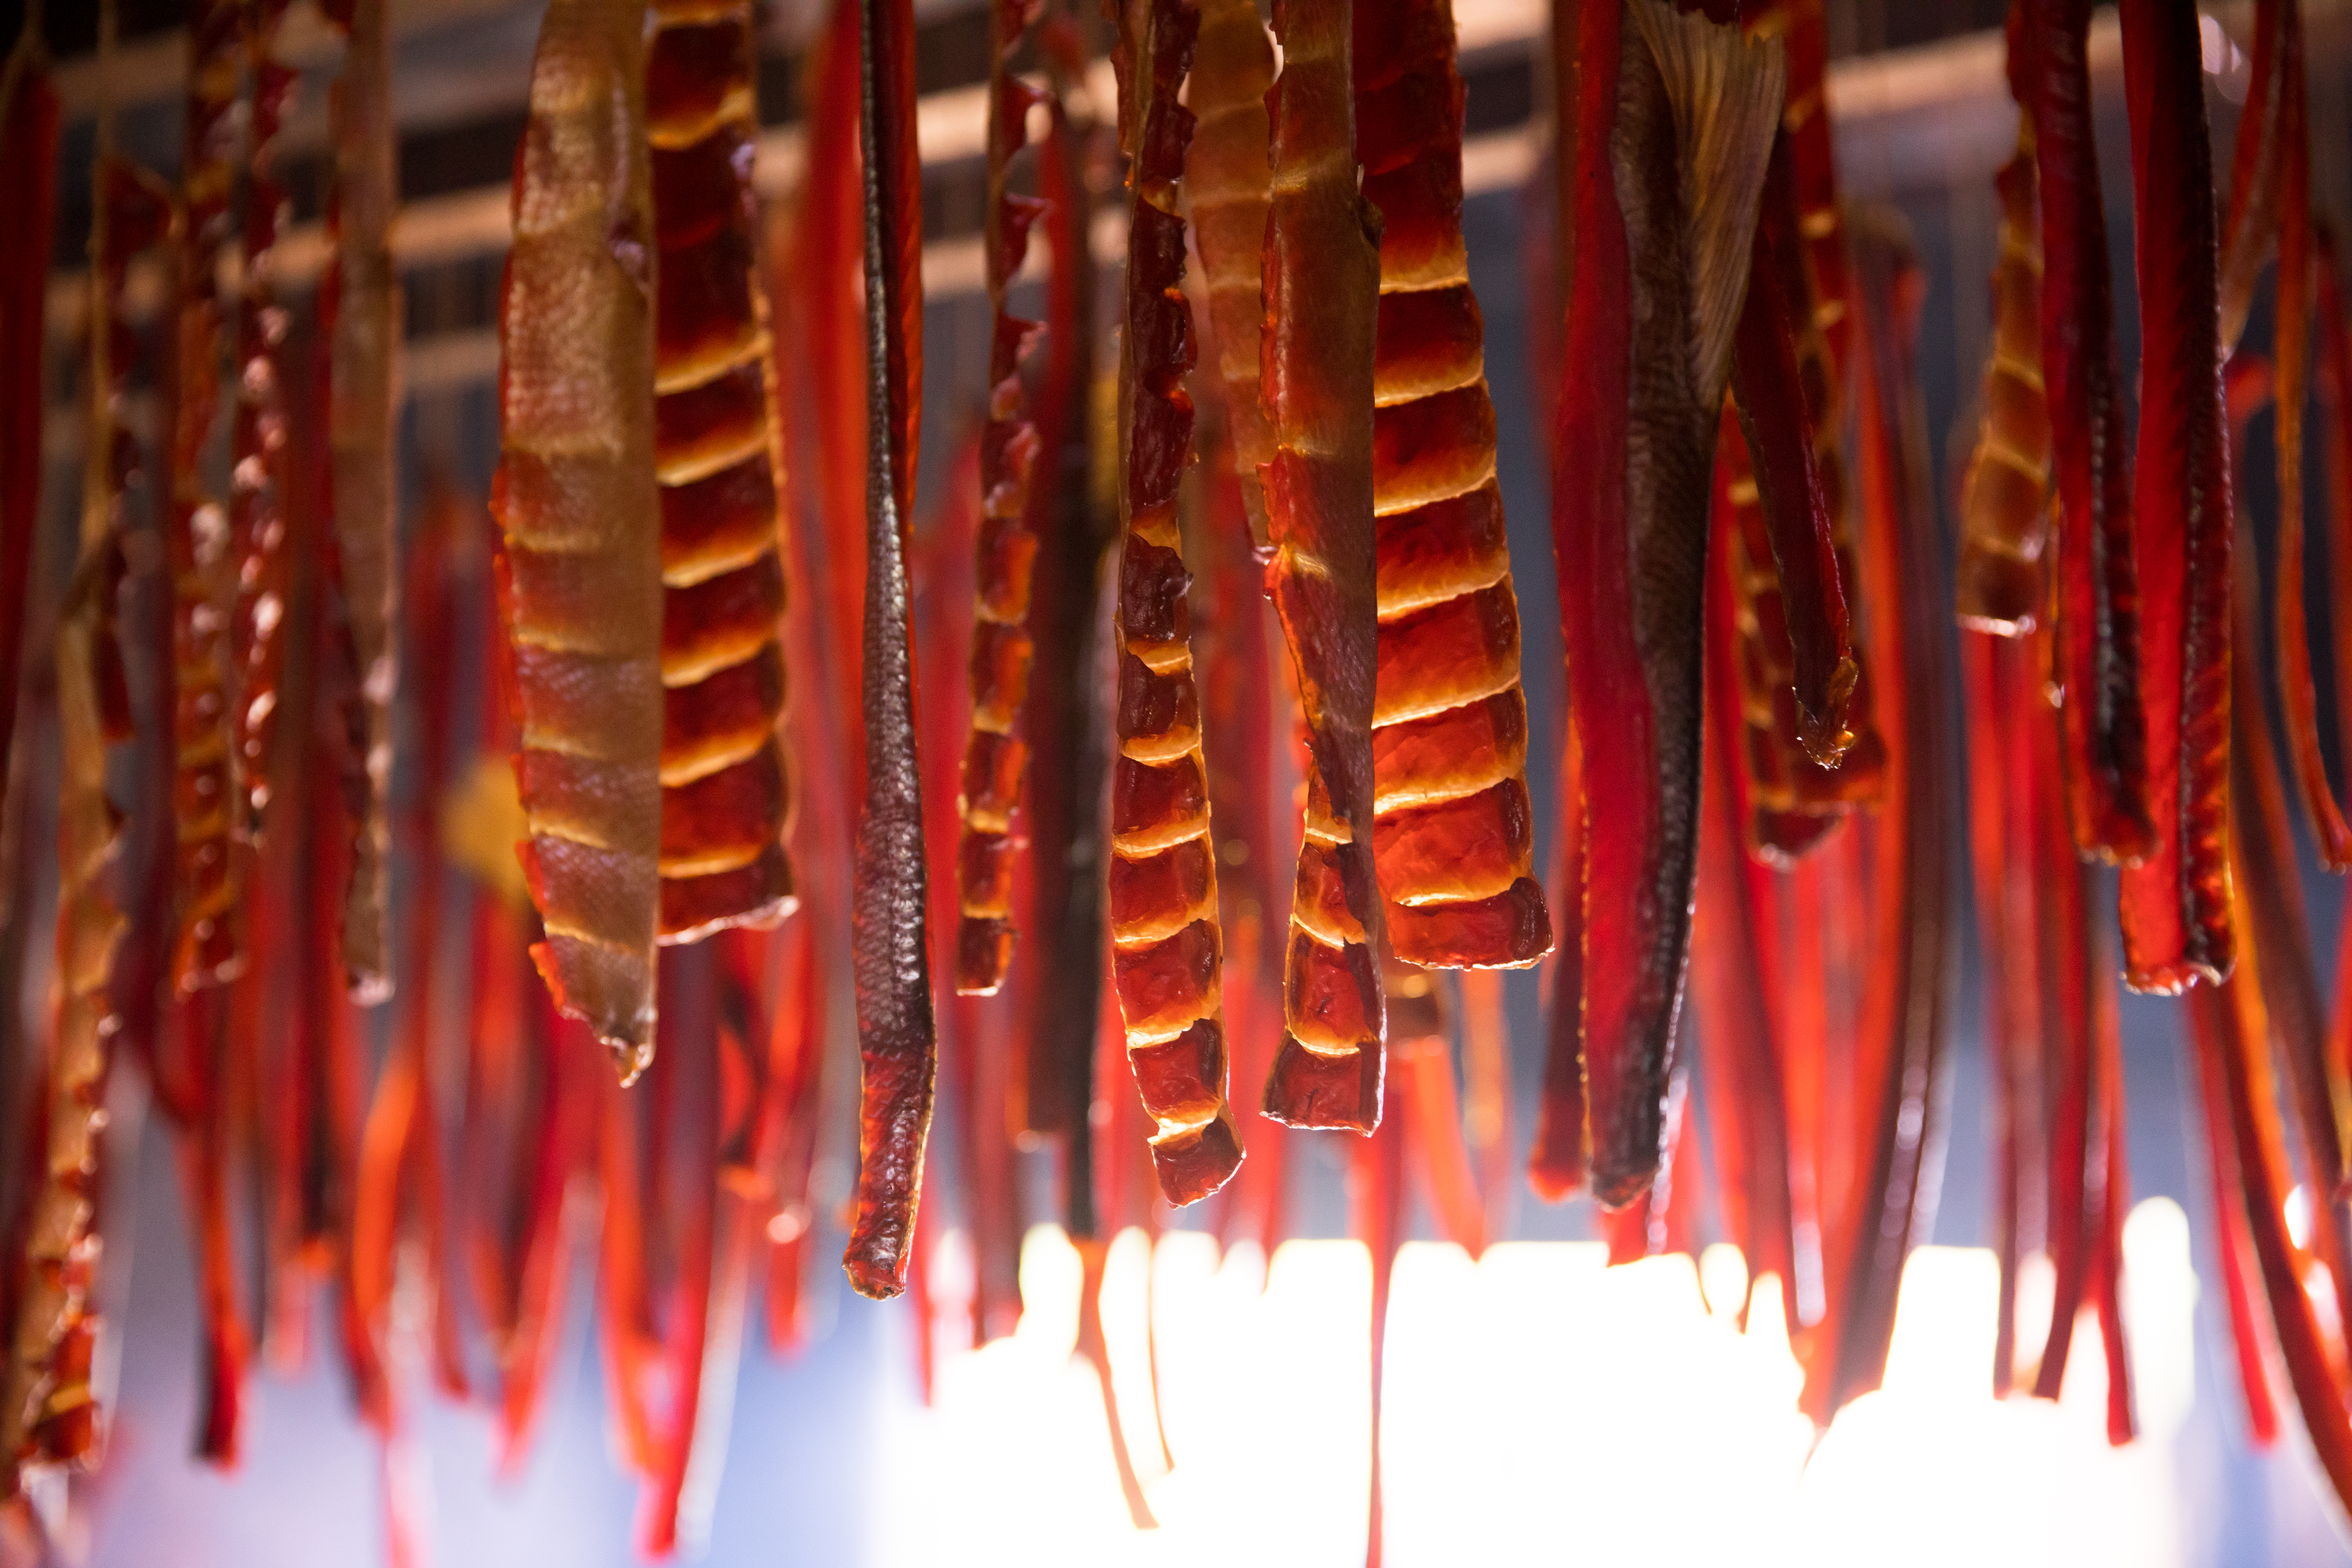 Strips of sockeye salmon hanging in a smokehouse